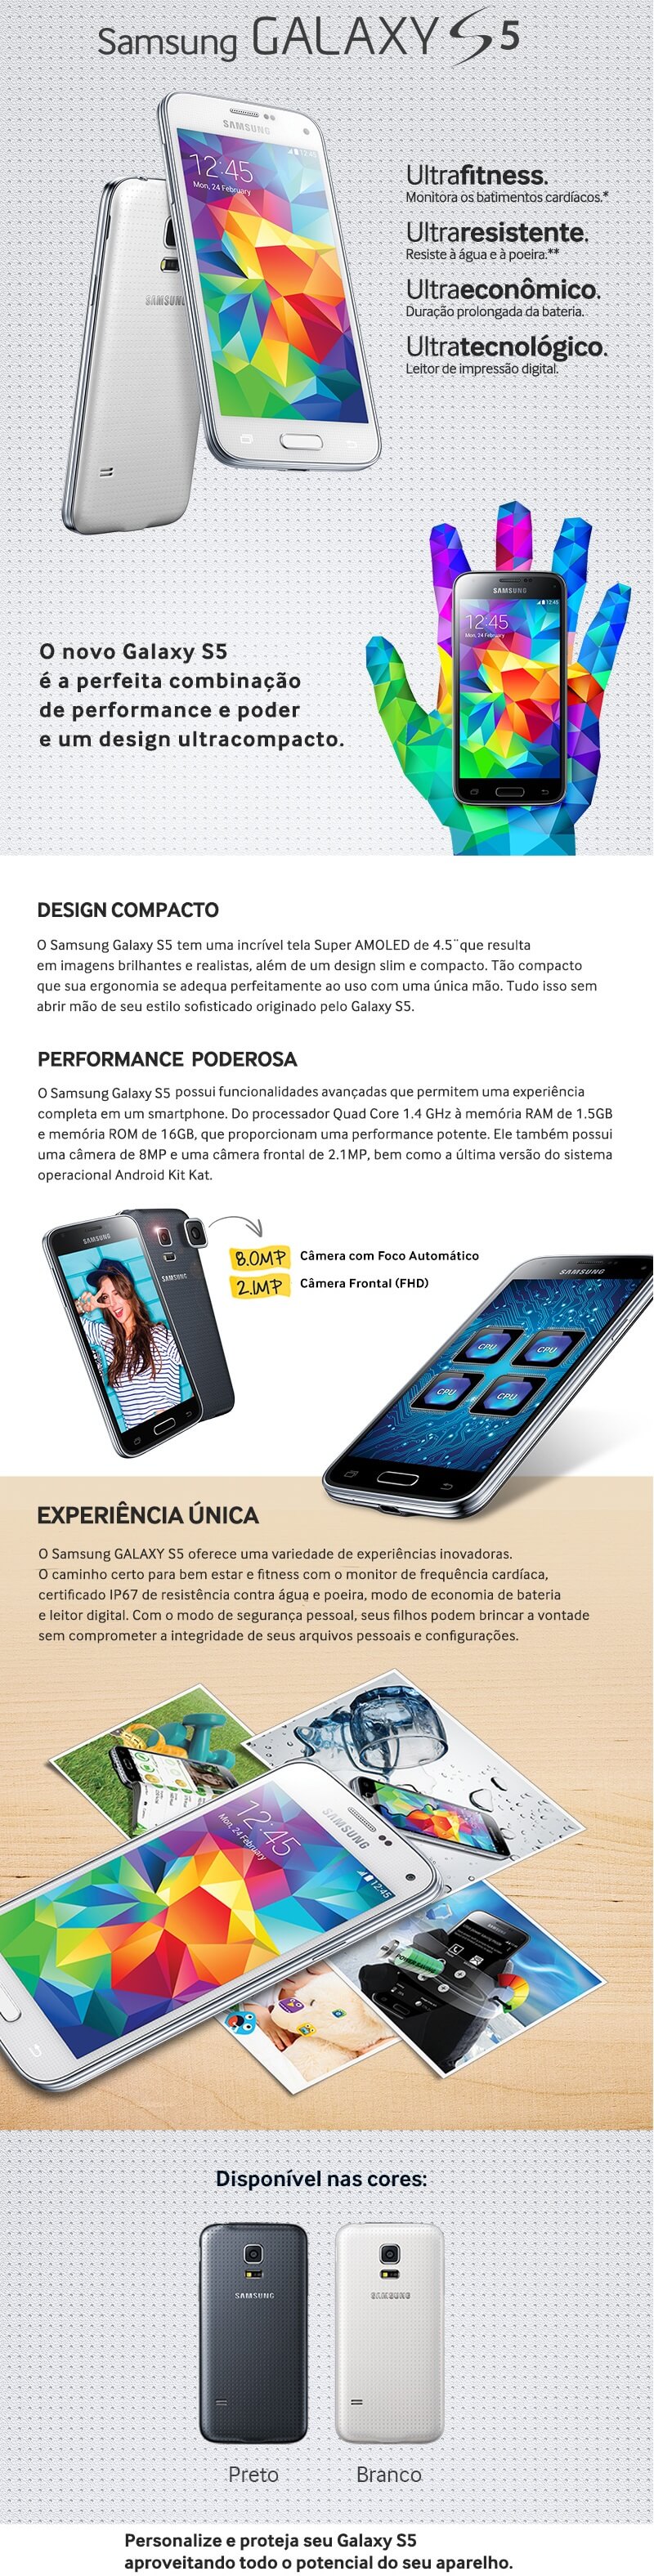 SMARTPHONE SAMSUNG GALAXY S5 Android 4.4 QUAD CORE 16GB CAM 8MPX